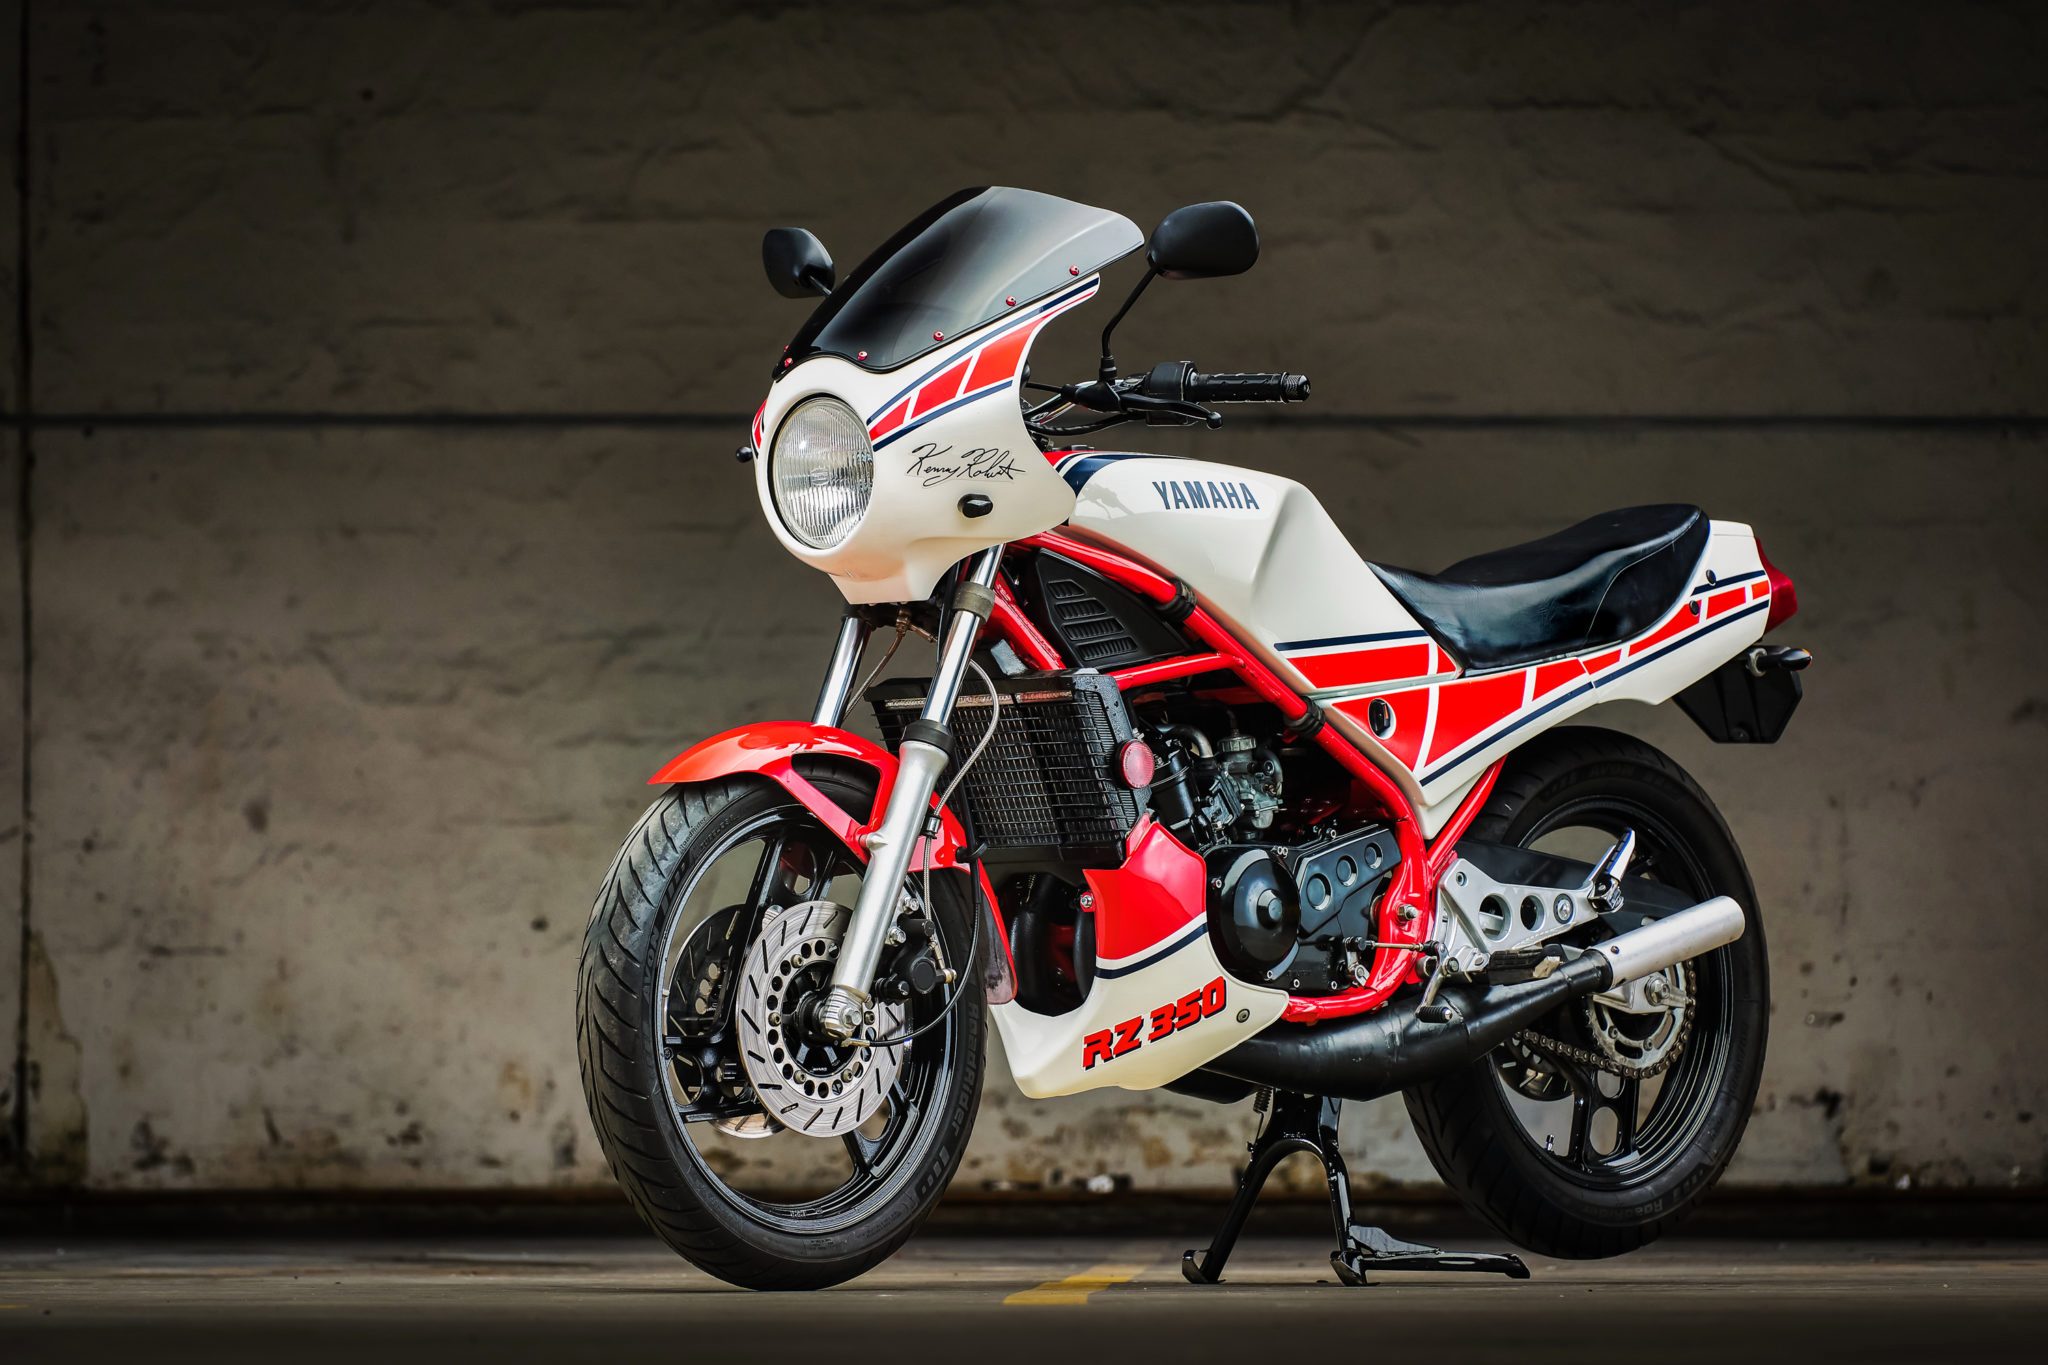 Motorcycle Yamaha Rz350 Kenny Roberts Edition 2048x1365